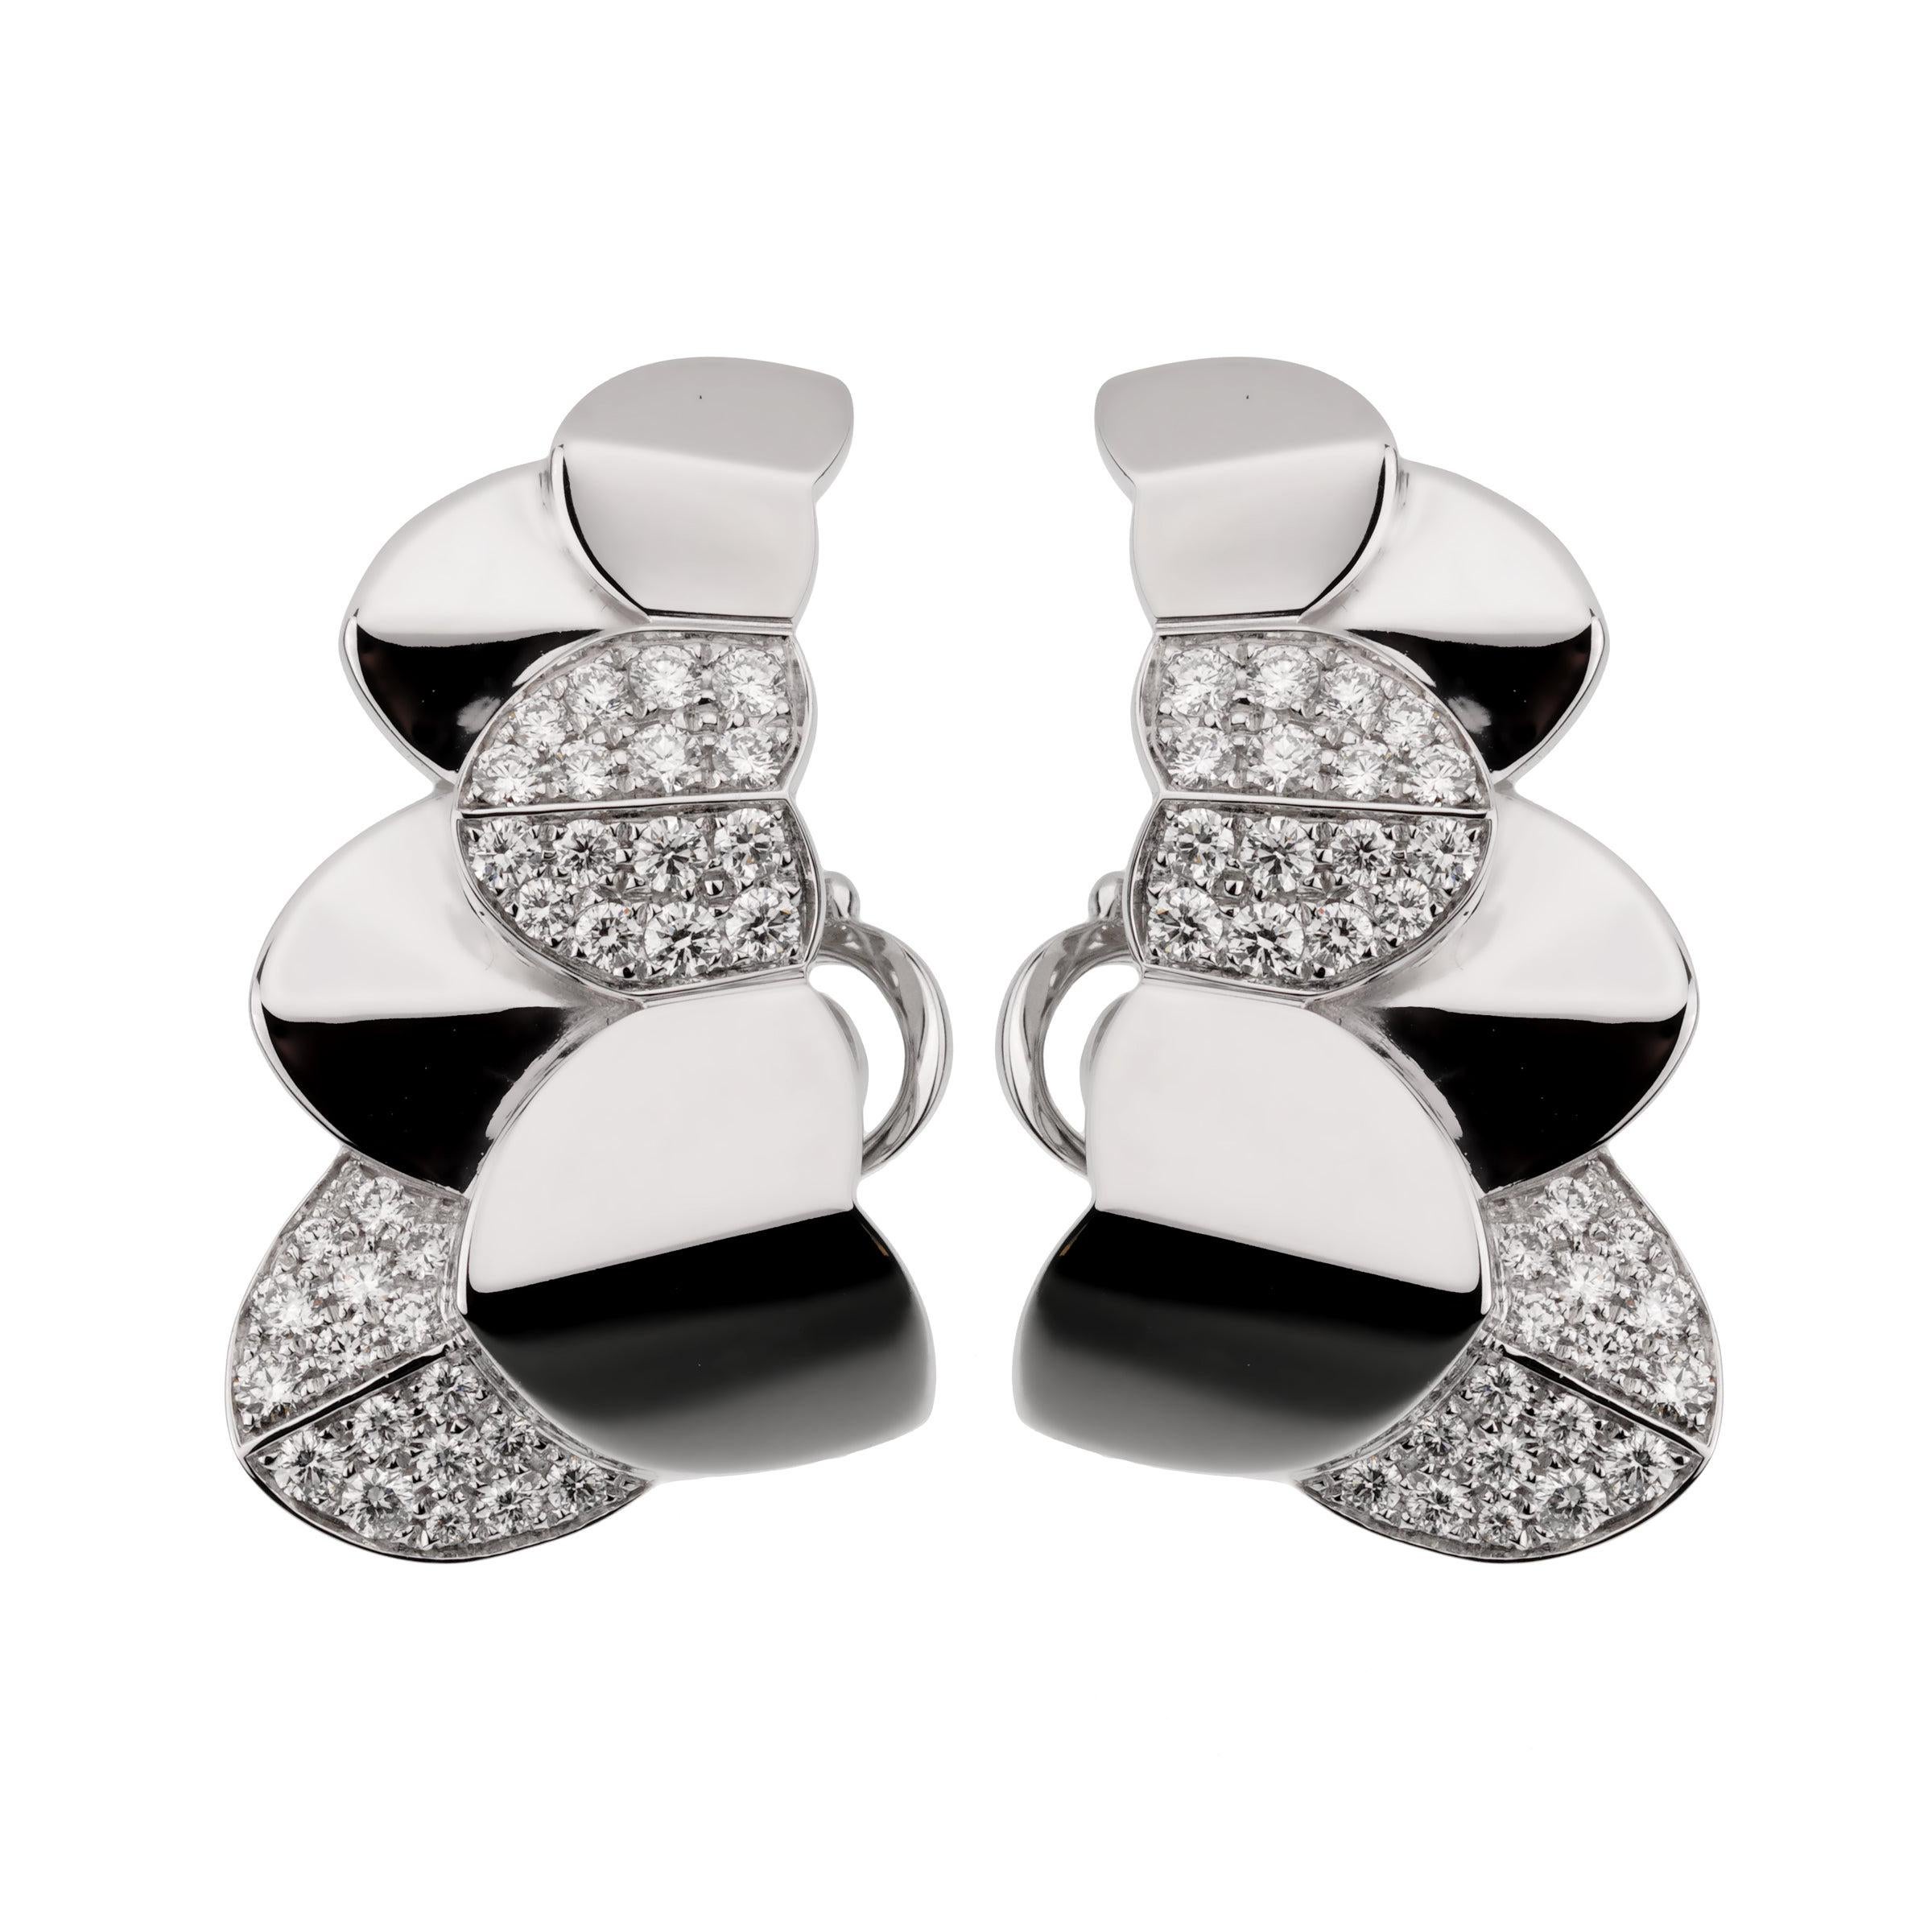 Fred of Paris Double Arc White Gold Diamond Earrings